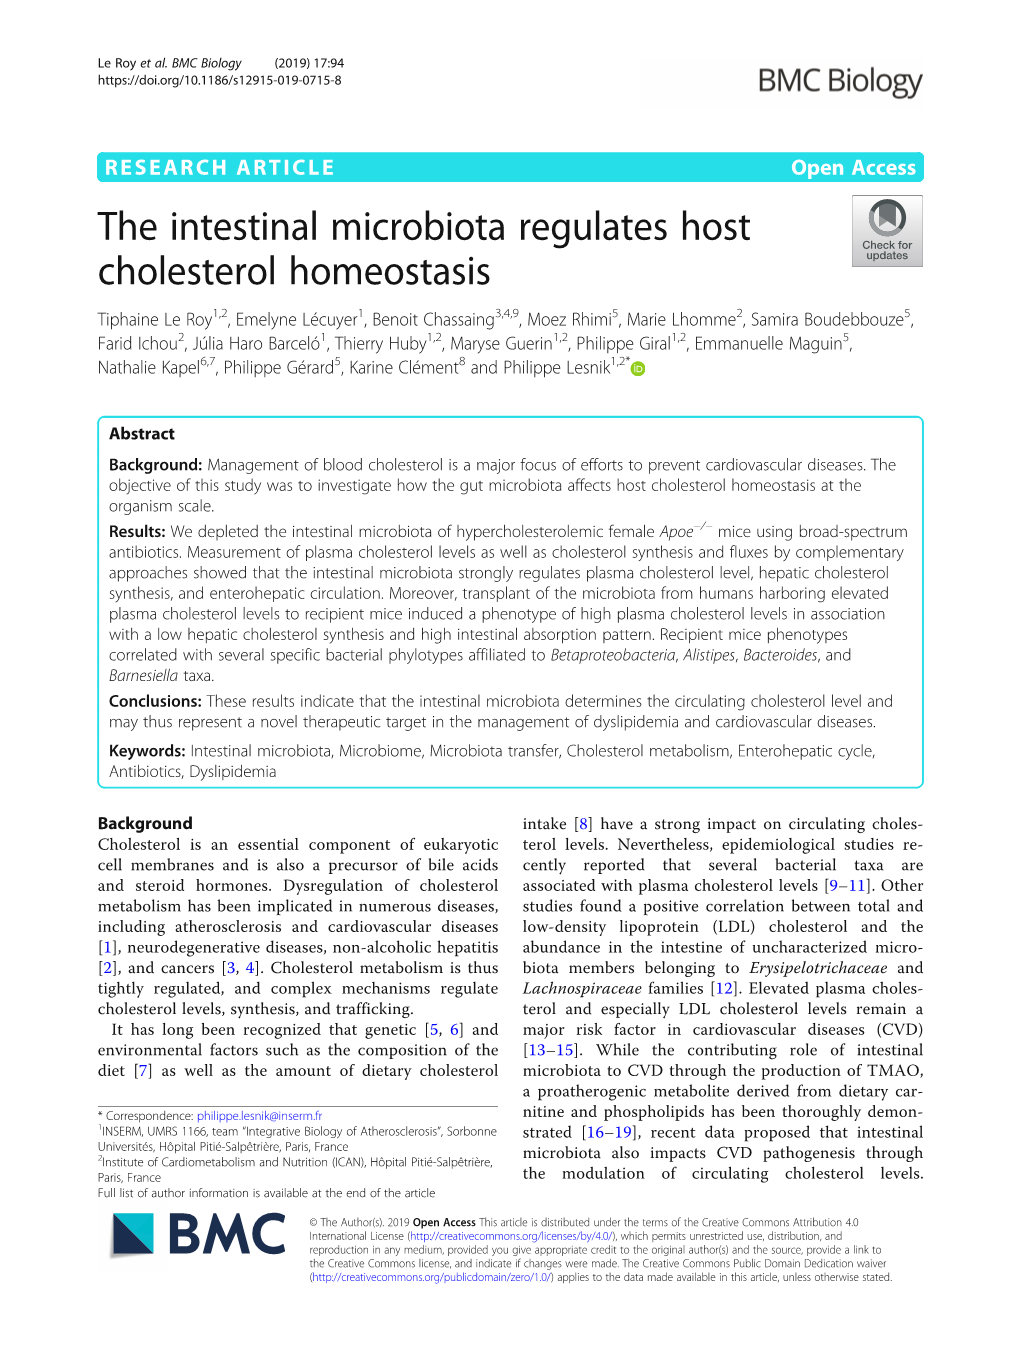 The Intestinal Microbiota Regulates Host Cholesterol Homeostasis